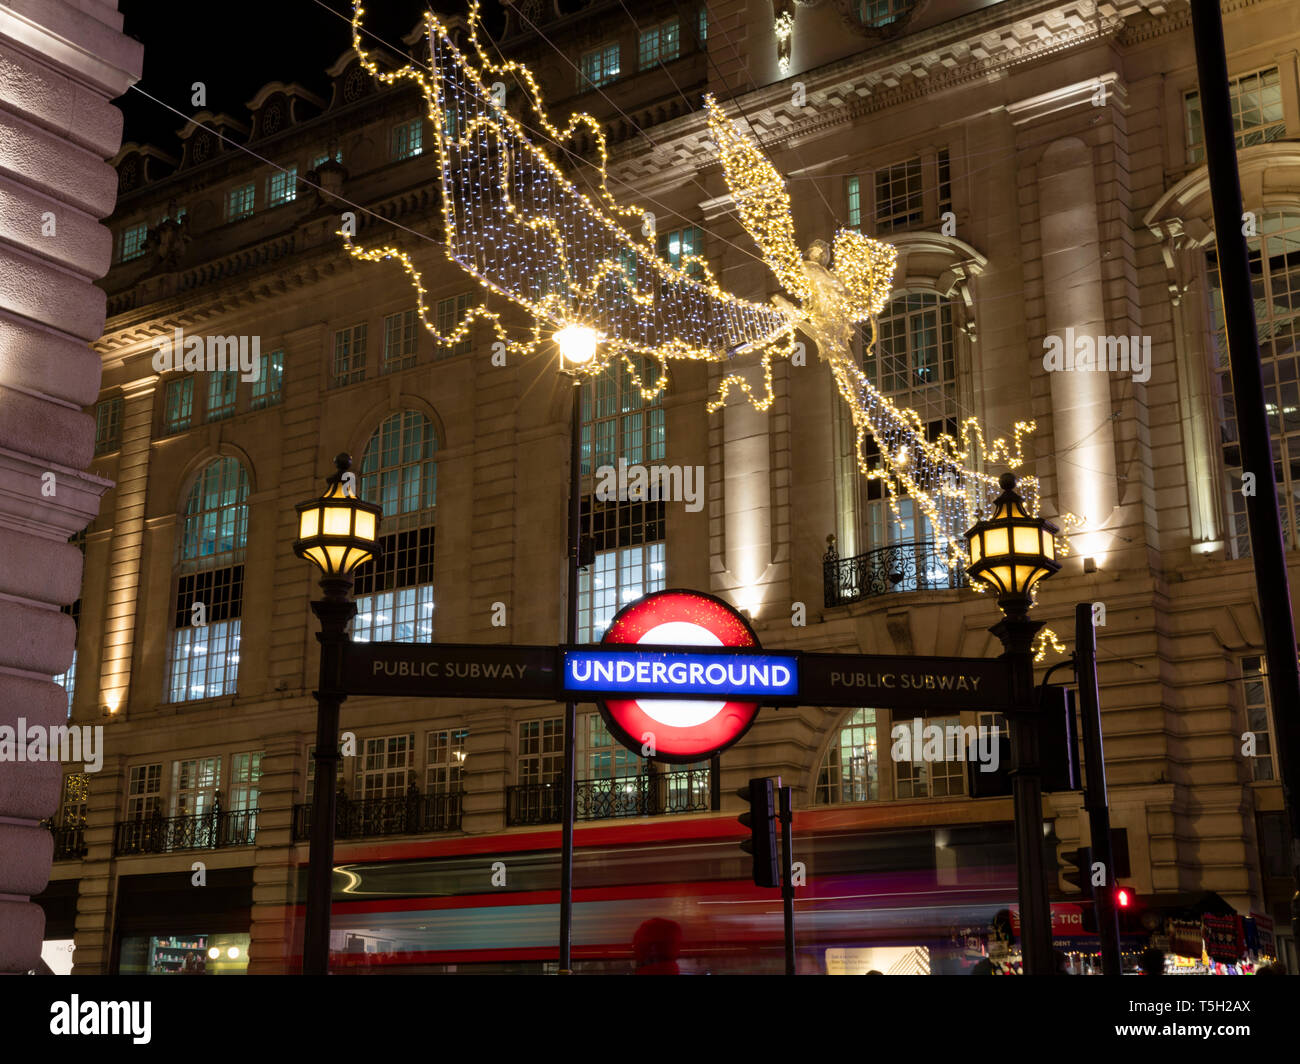 United Kingdom, England, London, Piccadilly Circus, Underground, Bus, Christmas illumination at night Stock Photo